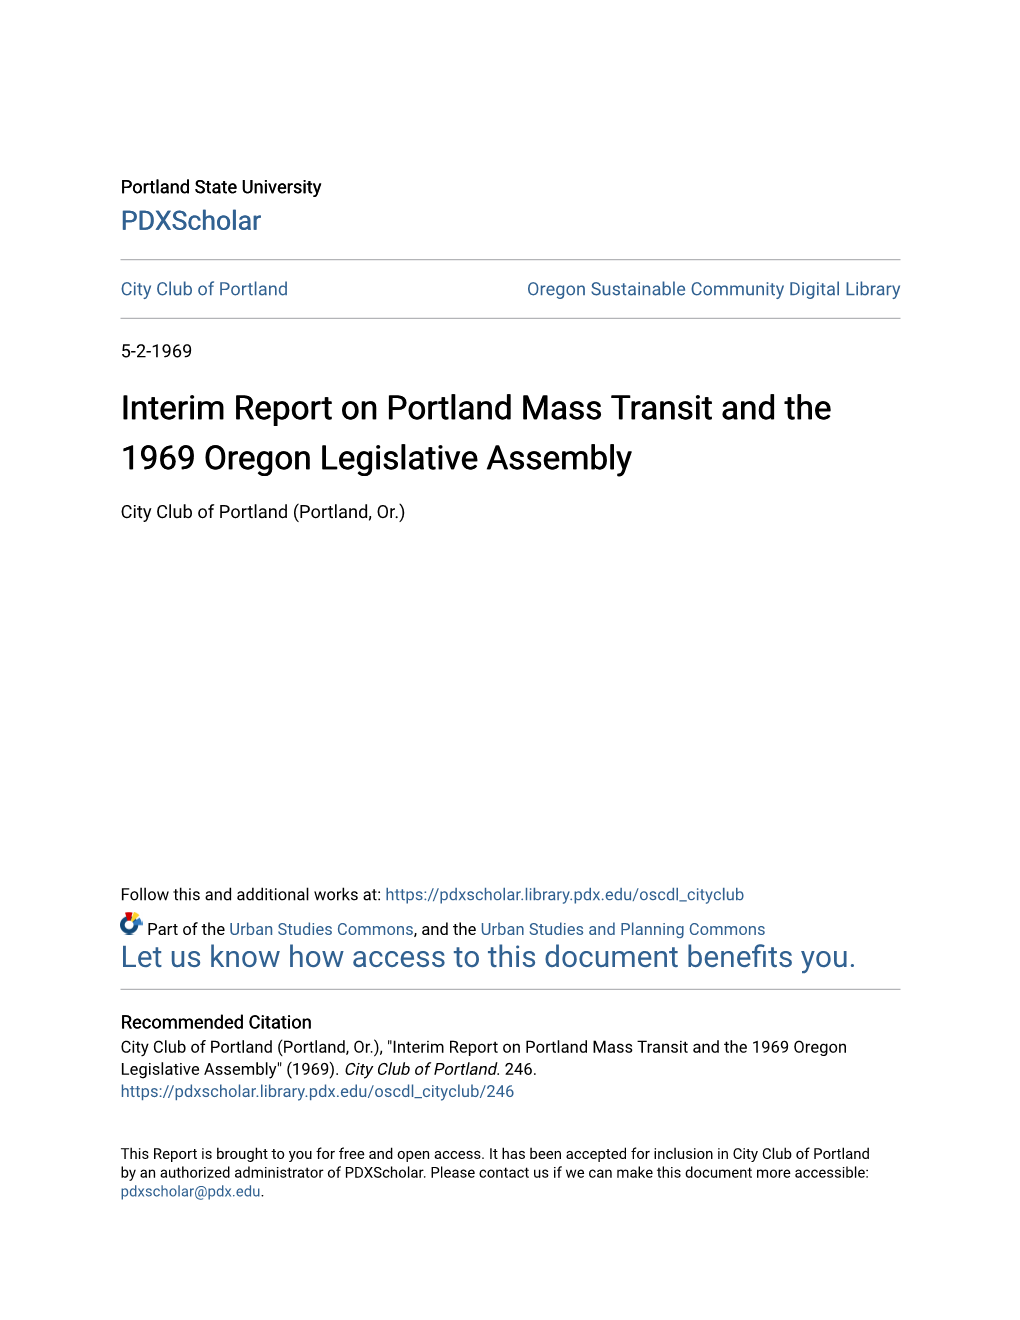 Interim Report on Portland Mass Transit and the 1969 Oregon Legislative Assembly